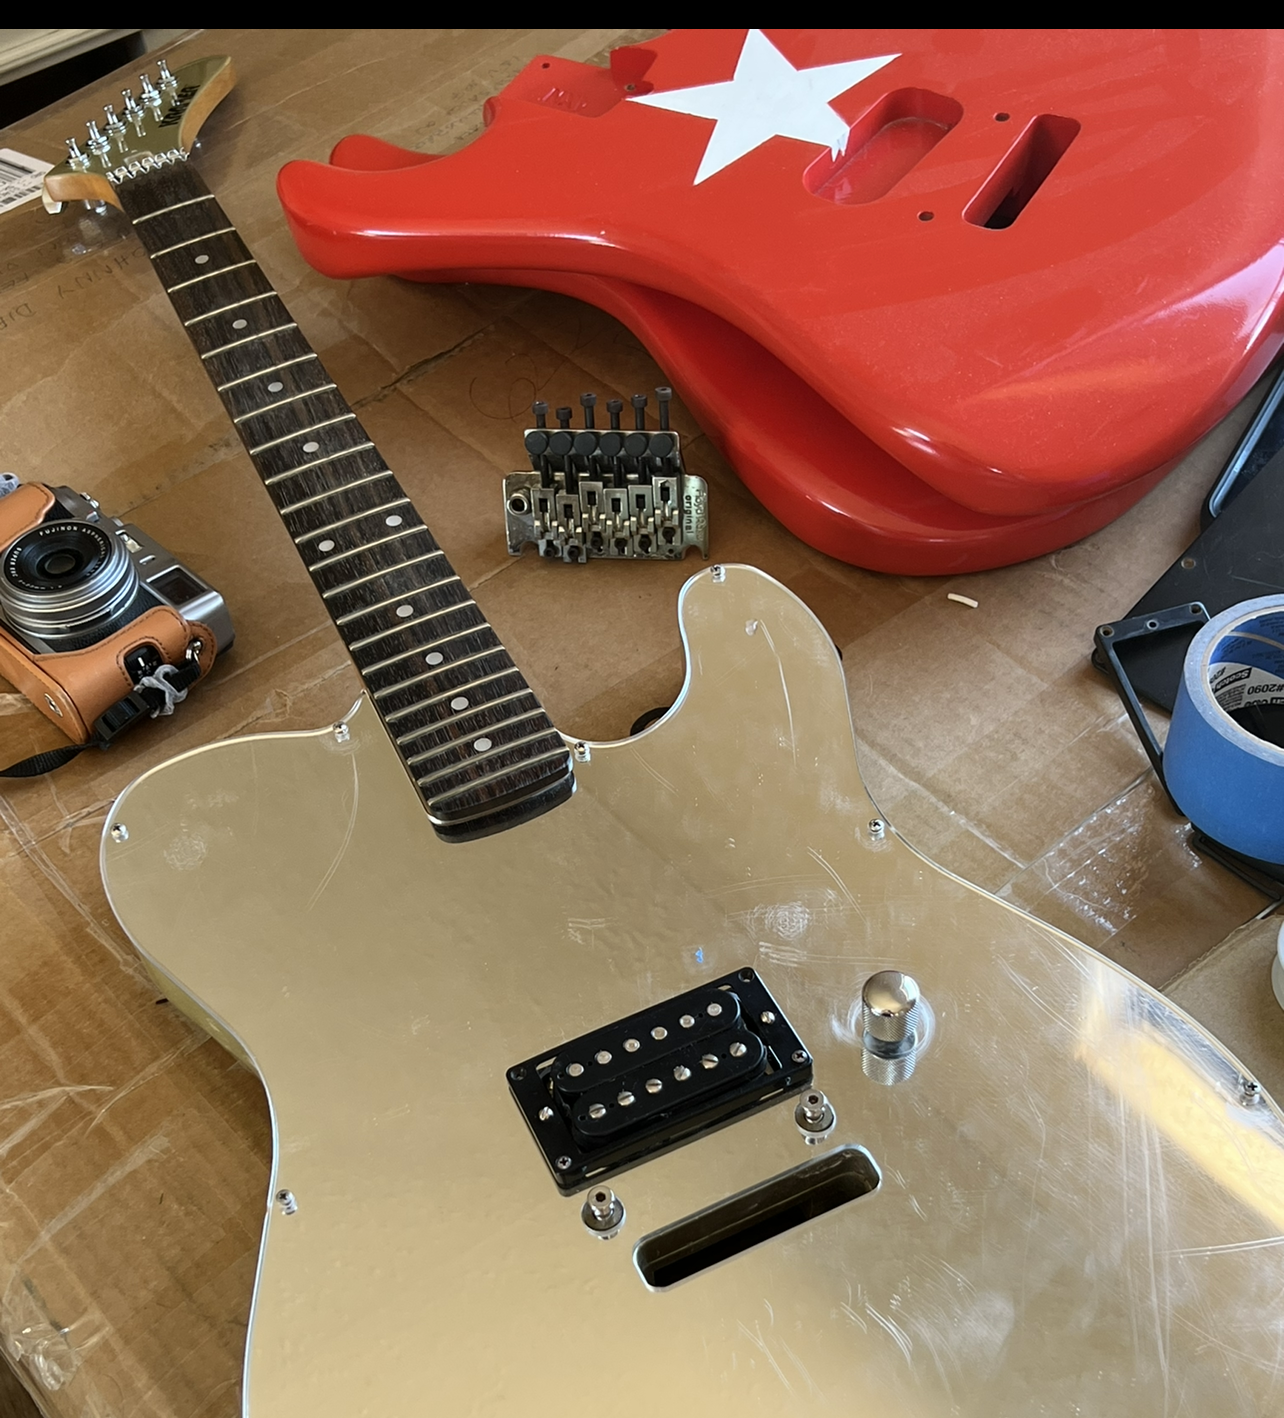 Fender NHL Telecaster Electric Guitars - Puck Junk